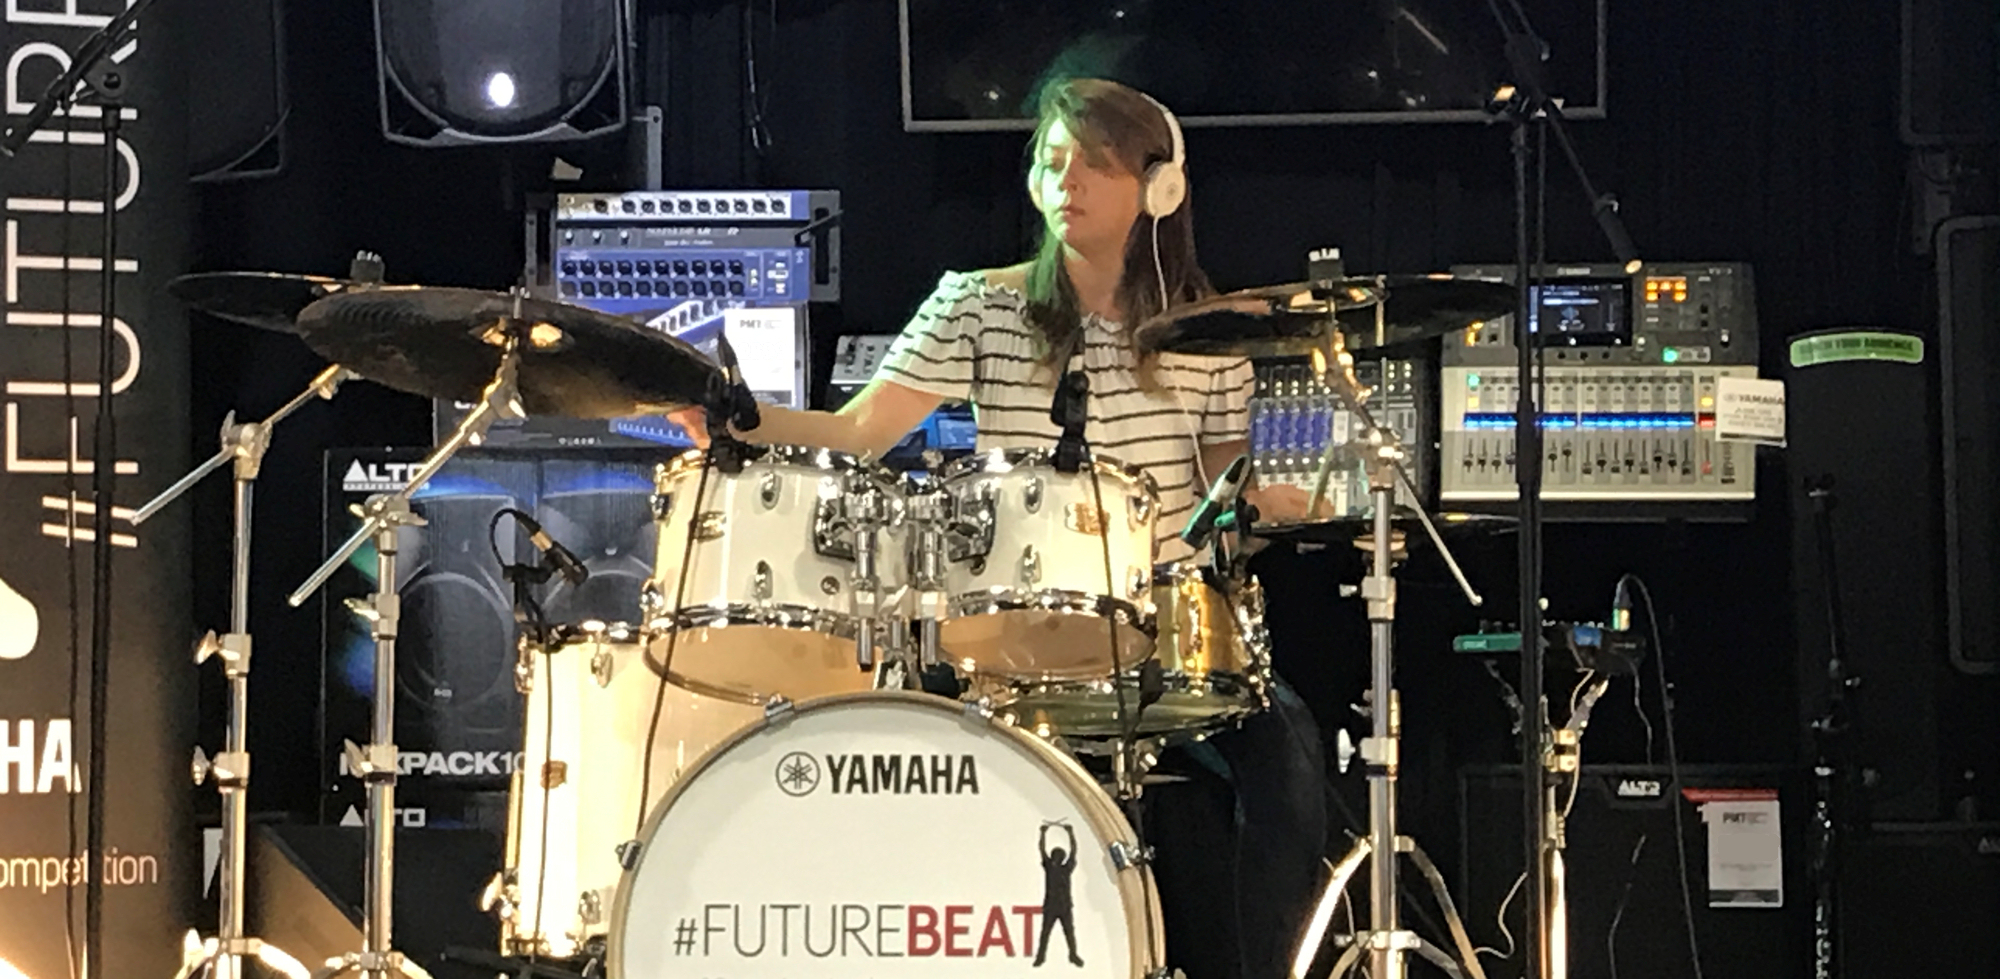 Georgia Inglis - Drummer